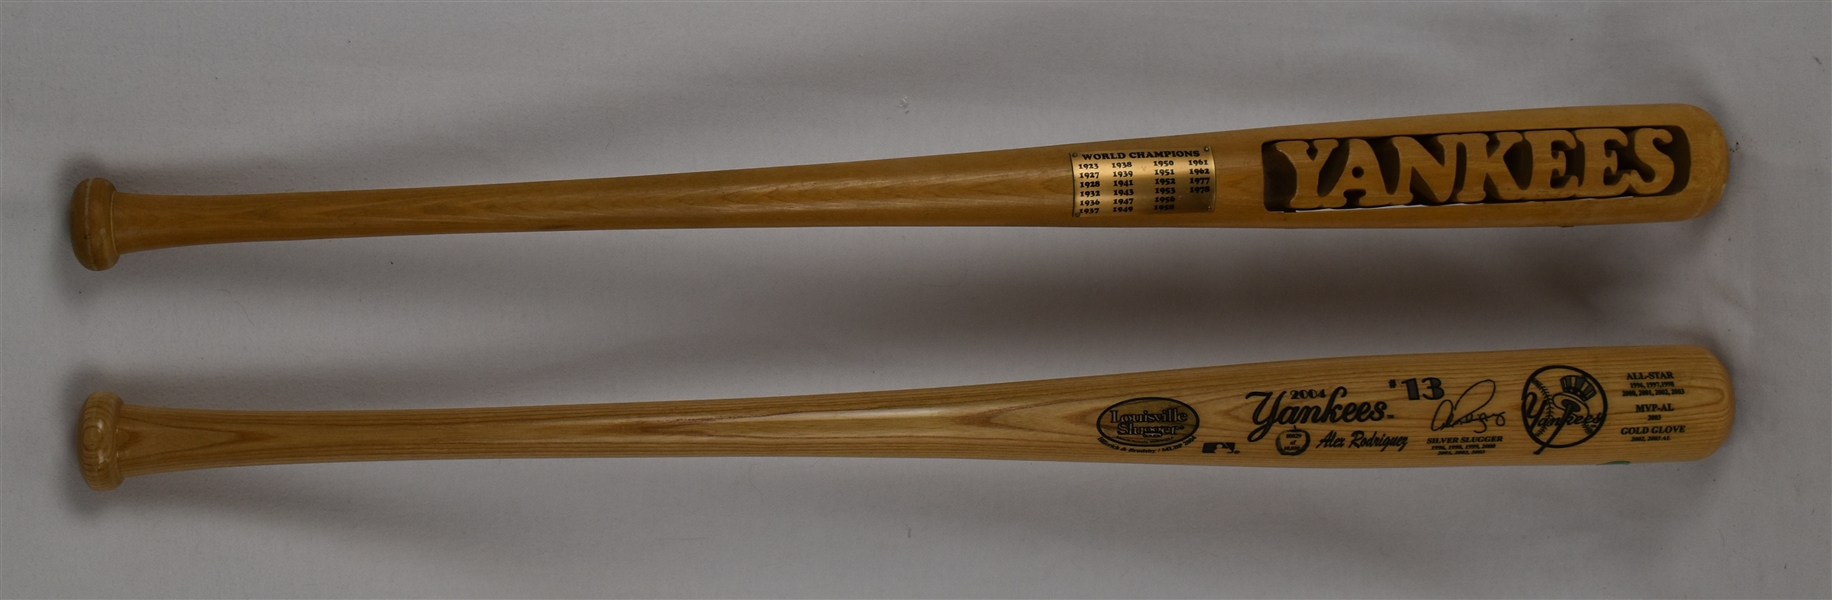 New York Yankee Baseball Bat showing all World Championships 	from 1923-1978 & Alex Rodriguez Engraved Bat